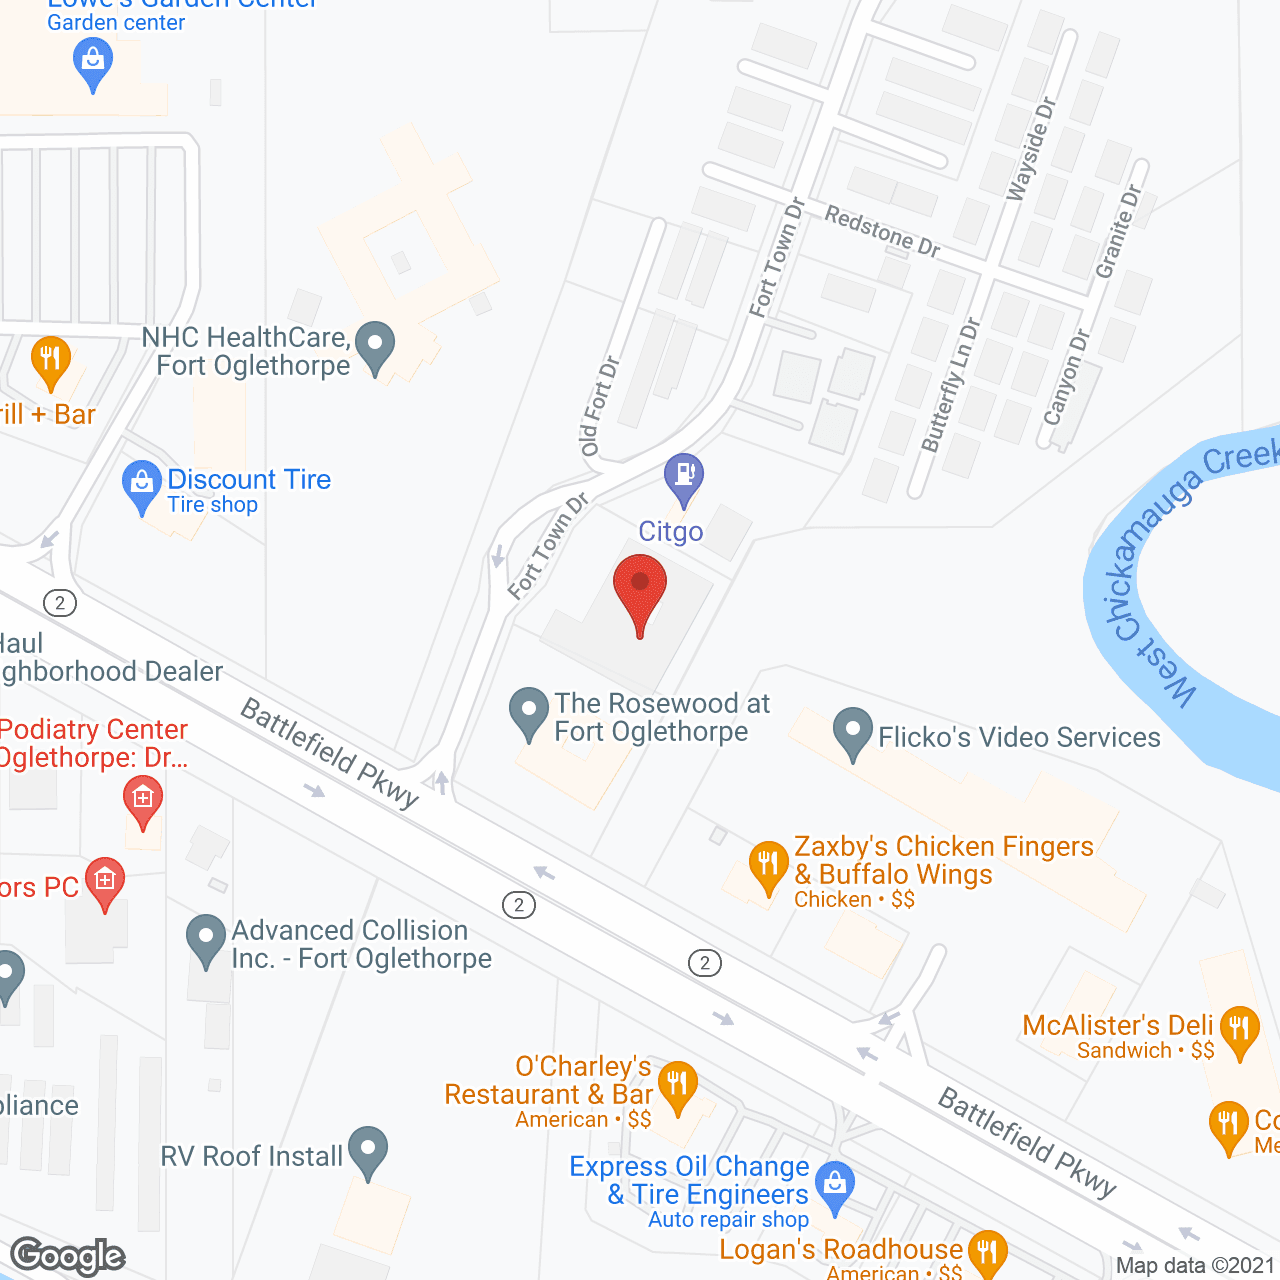 The Rosewood at Fort Oglethorpe in google map